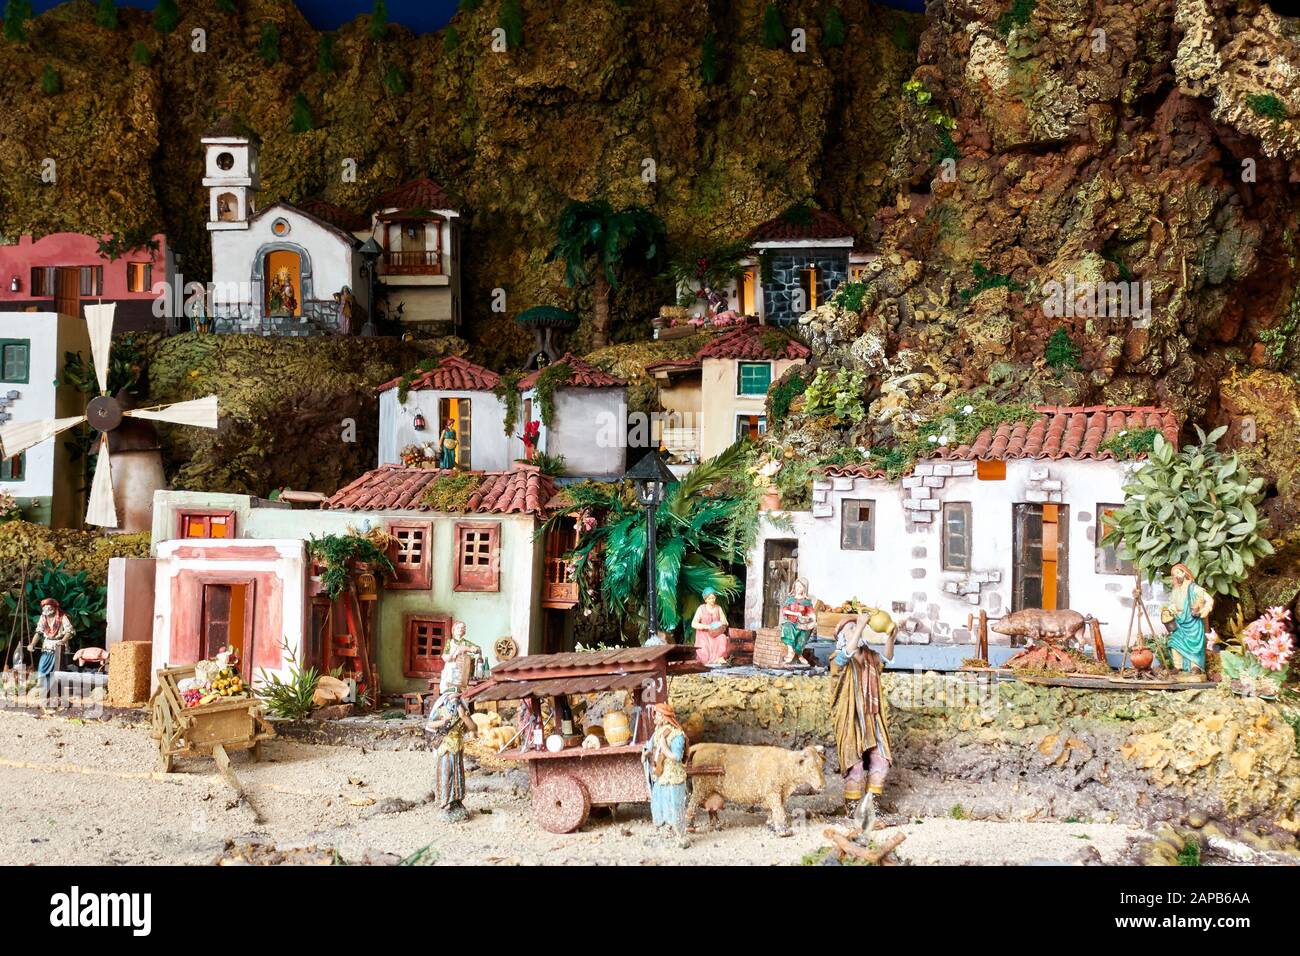 Candelaria, Tenerife, Spagna - 12 dicembre 2019: Belen di Natale - Creche (presepe), Presepe, statuetta di persone e case in miniatura Foto Stock